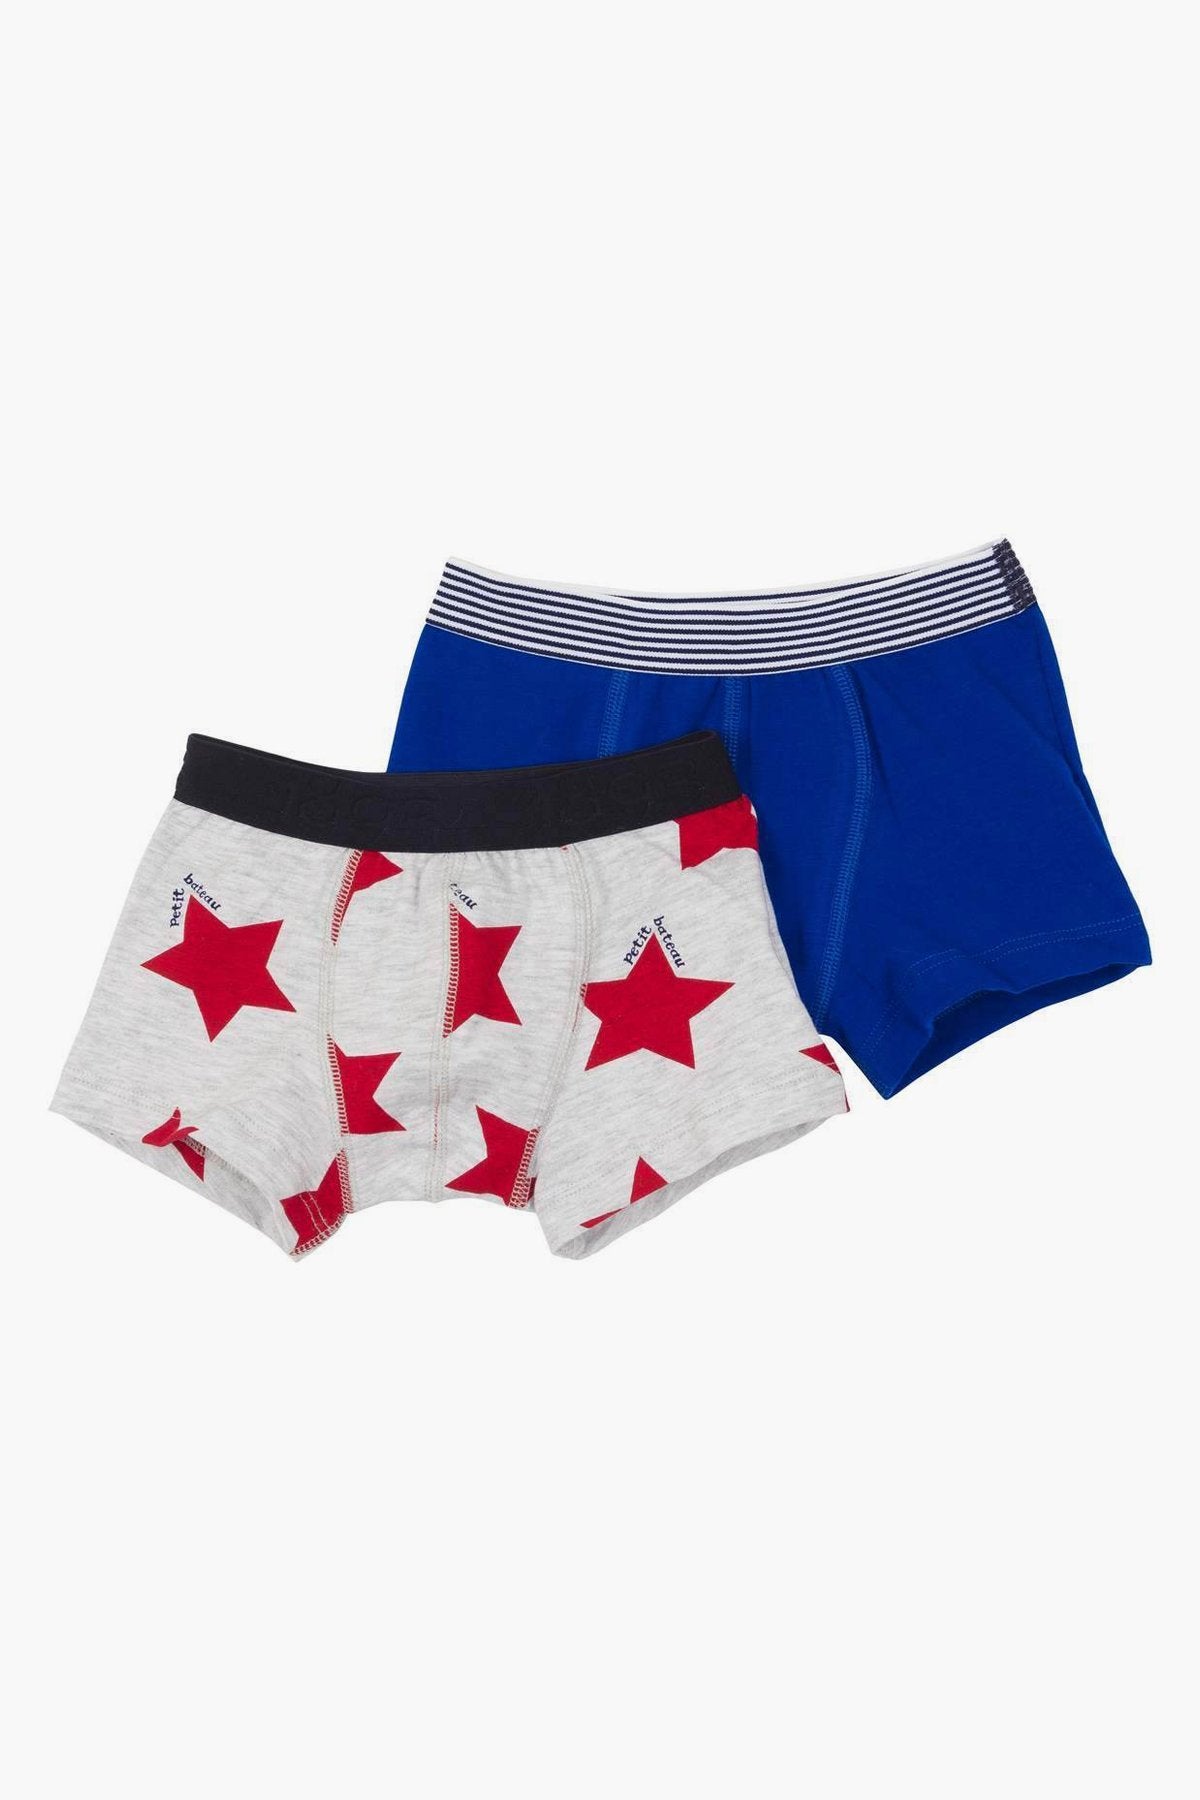 Old Navy Boy Underwear 6 Pack Boxer Brief Solid Sharks Stripes